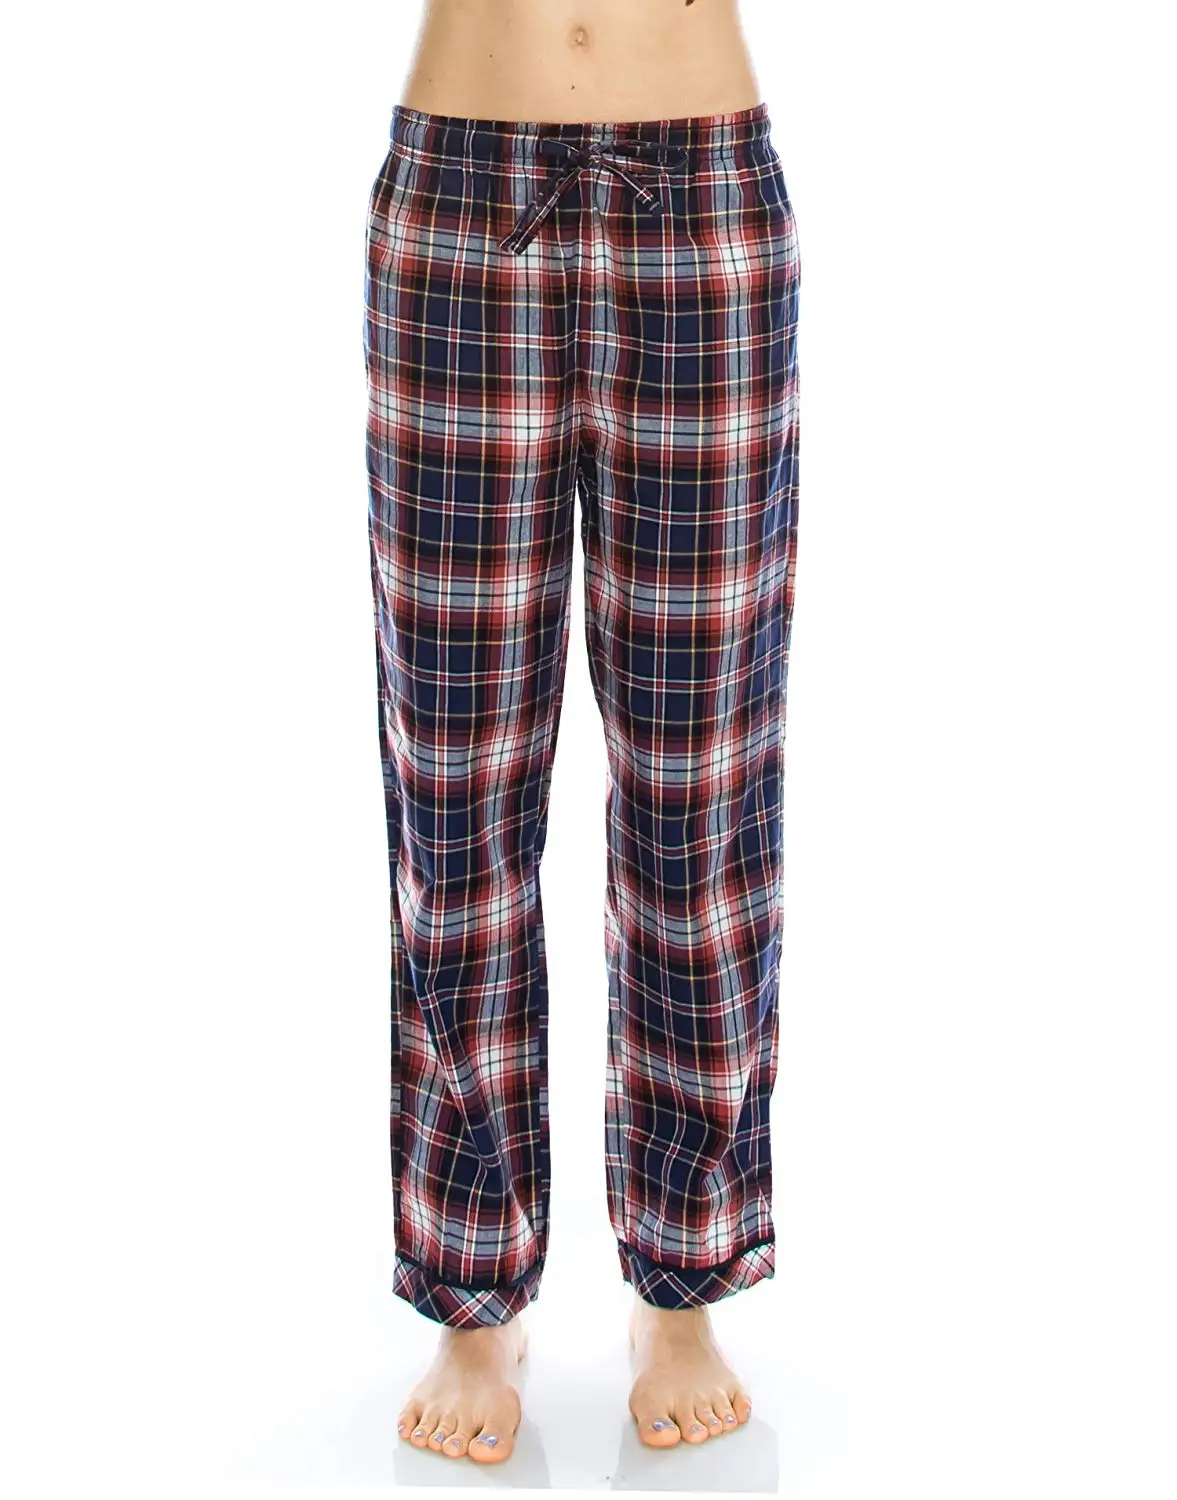 Cheap Girls Plaid Pajama Pants, find Girls Plaid Pajama Pants deals on ...